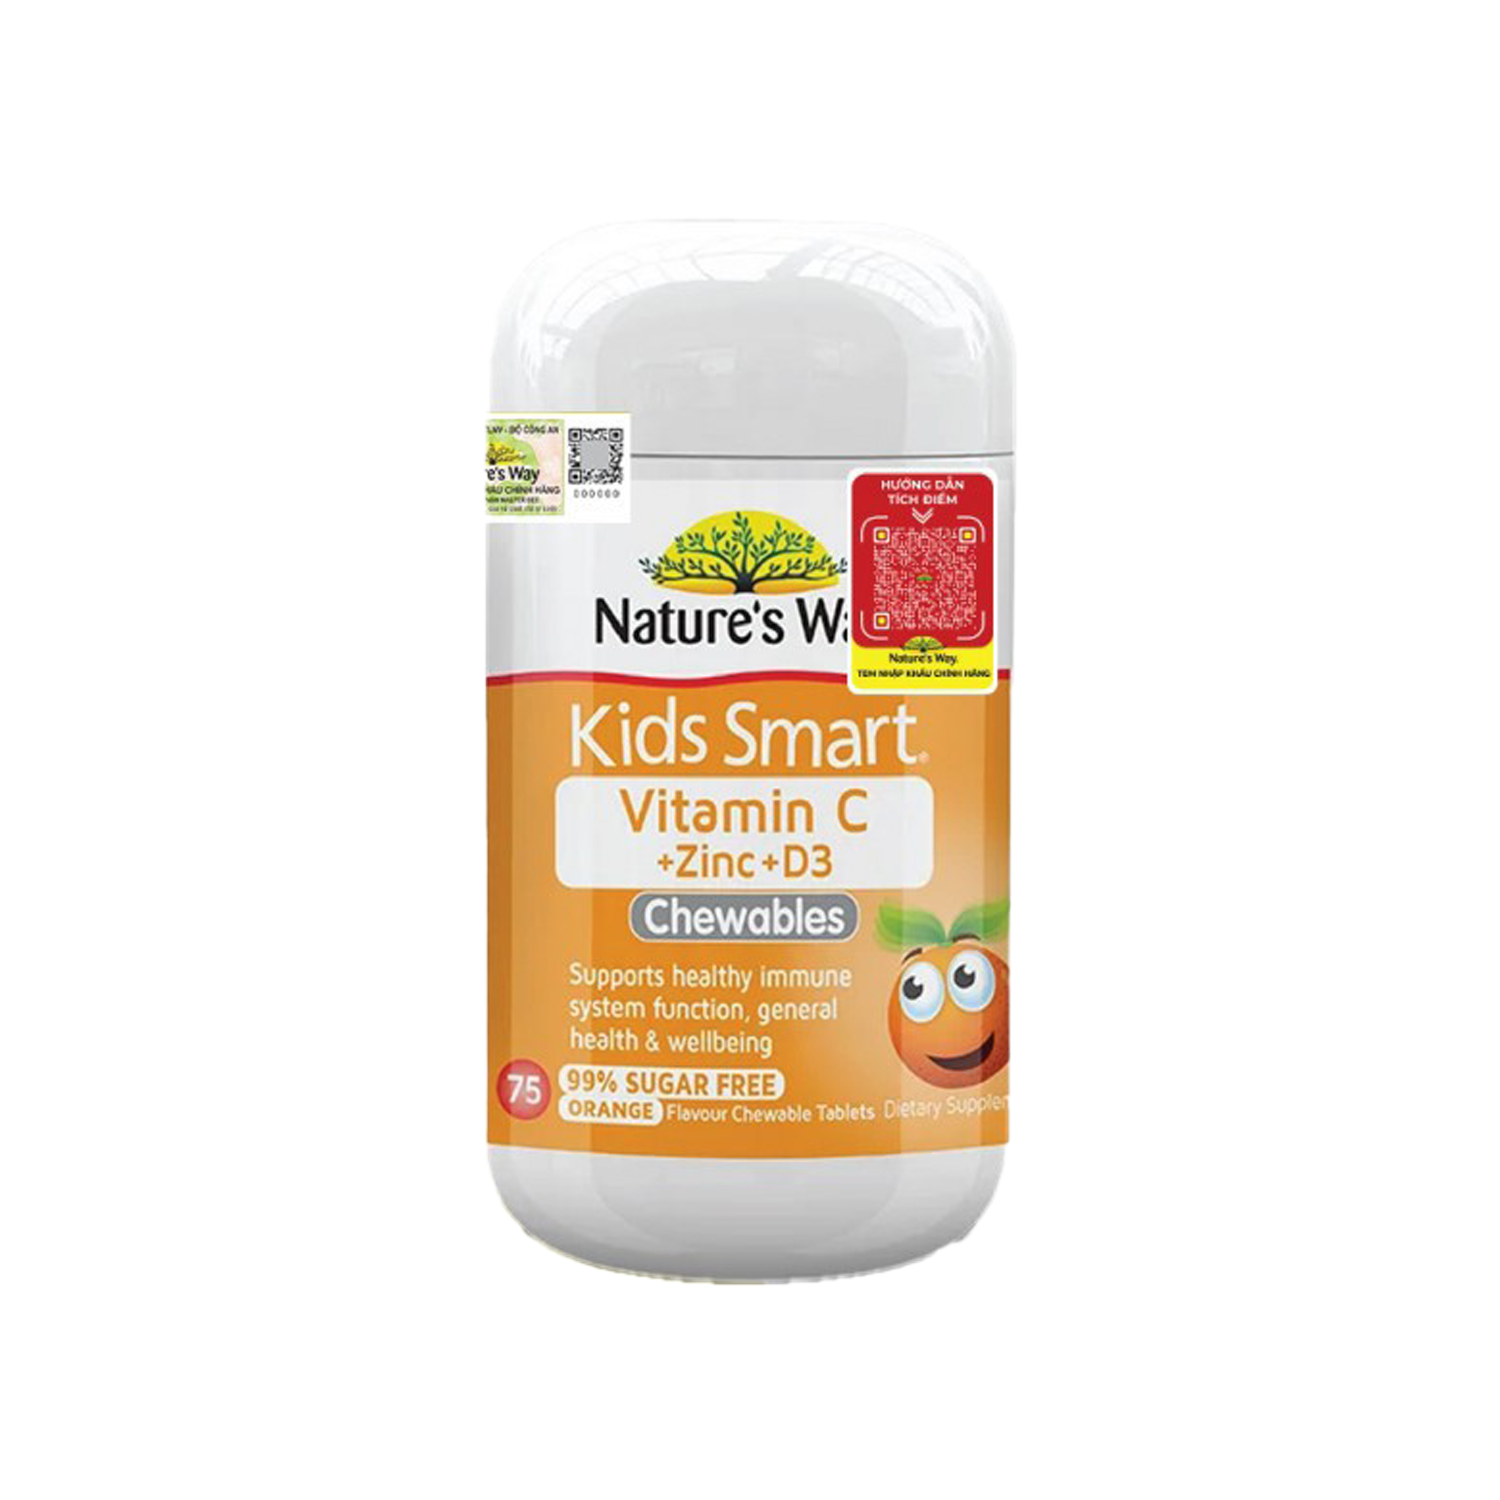 Nature’s Way Kids Smart Vitamin C + Zinc + D3